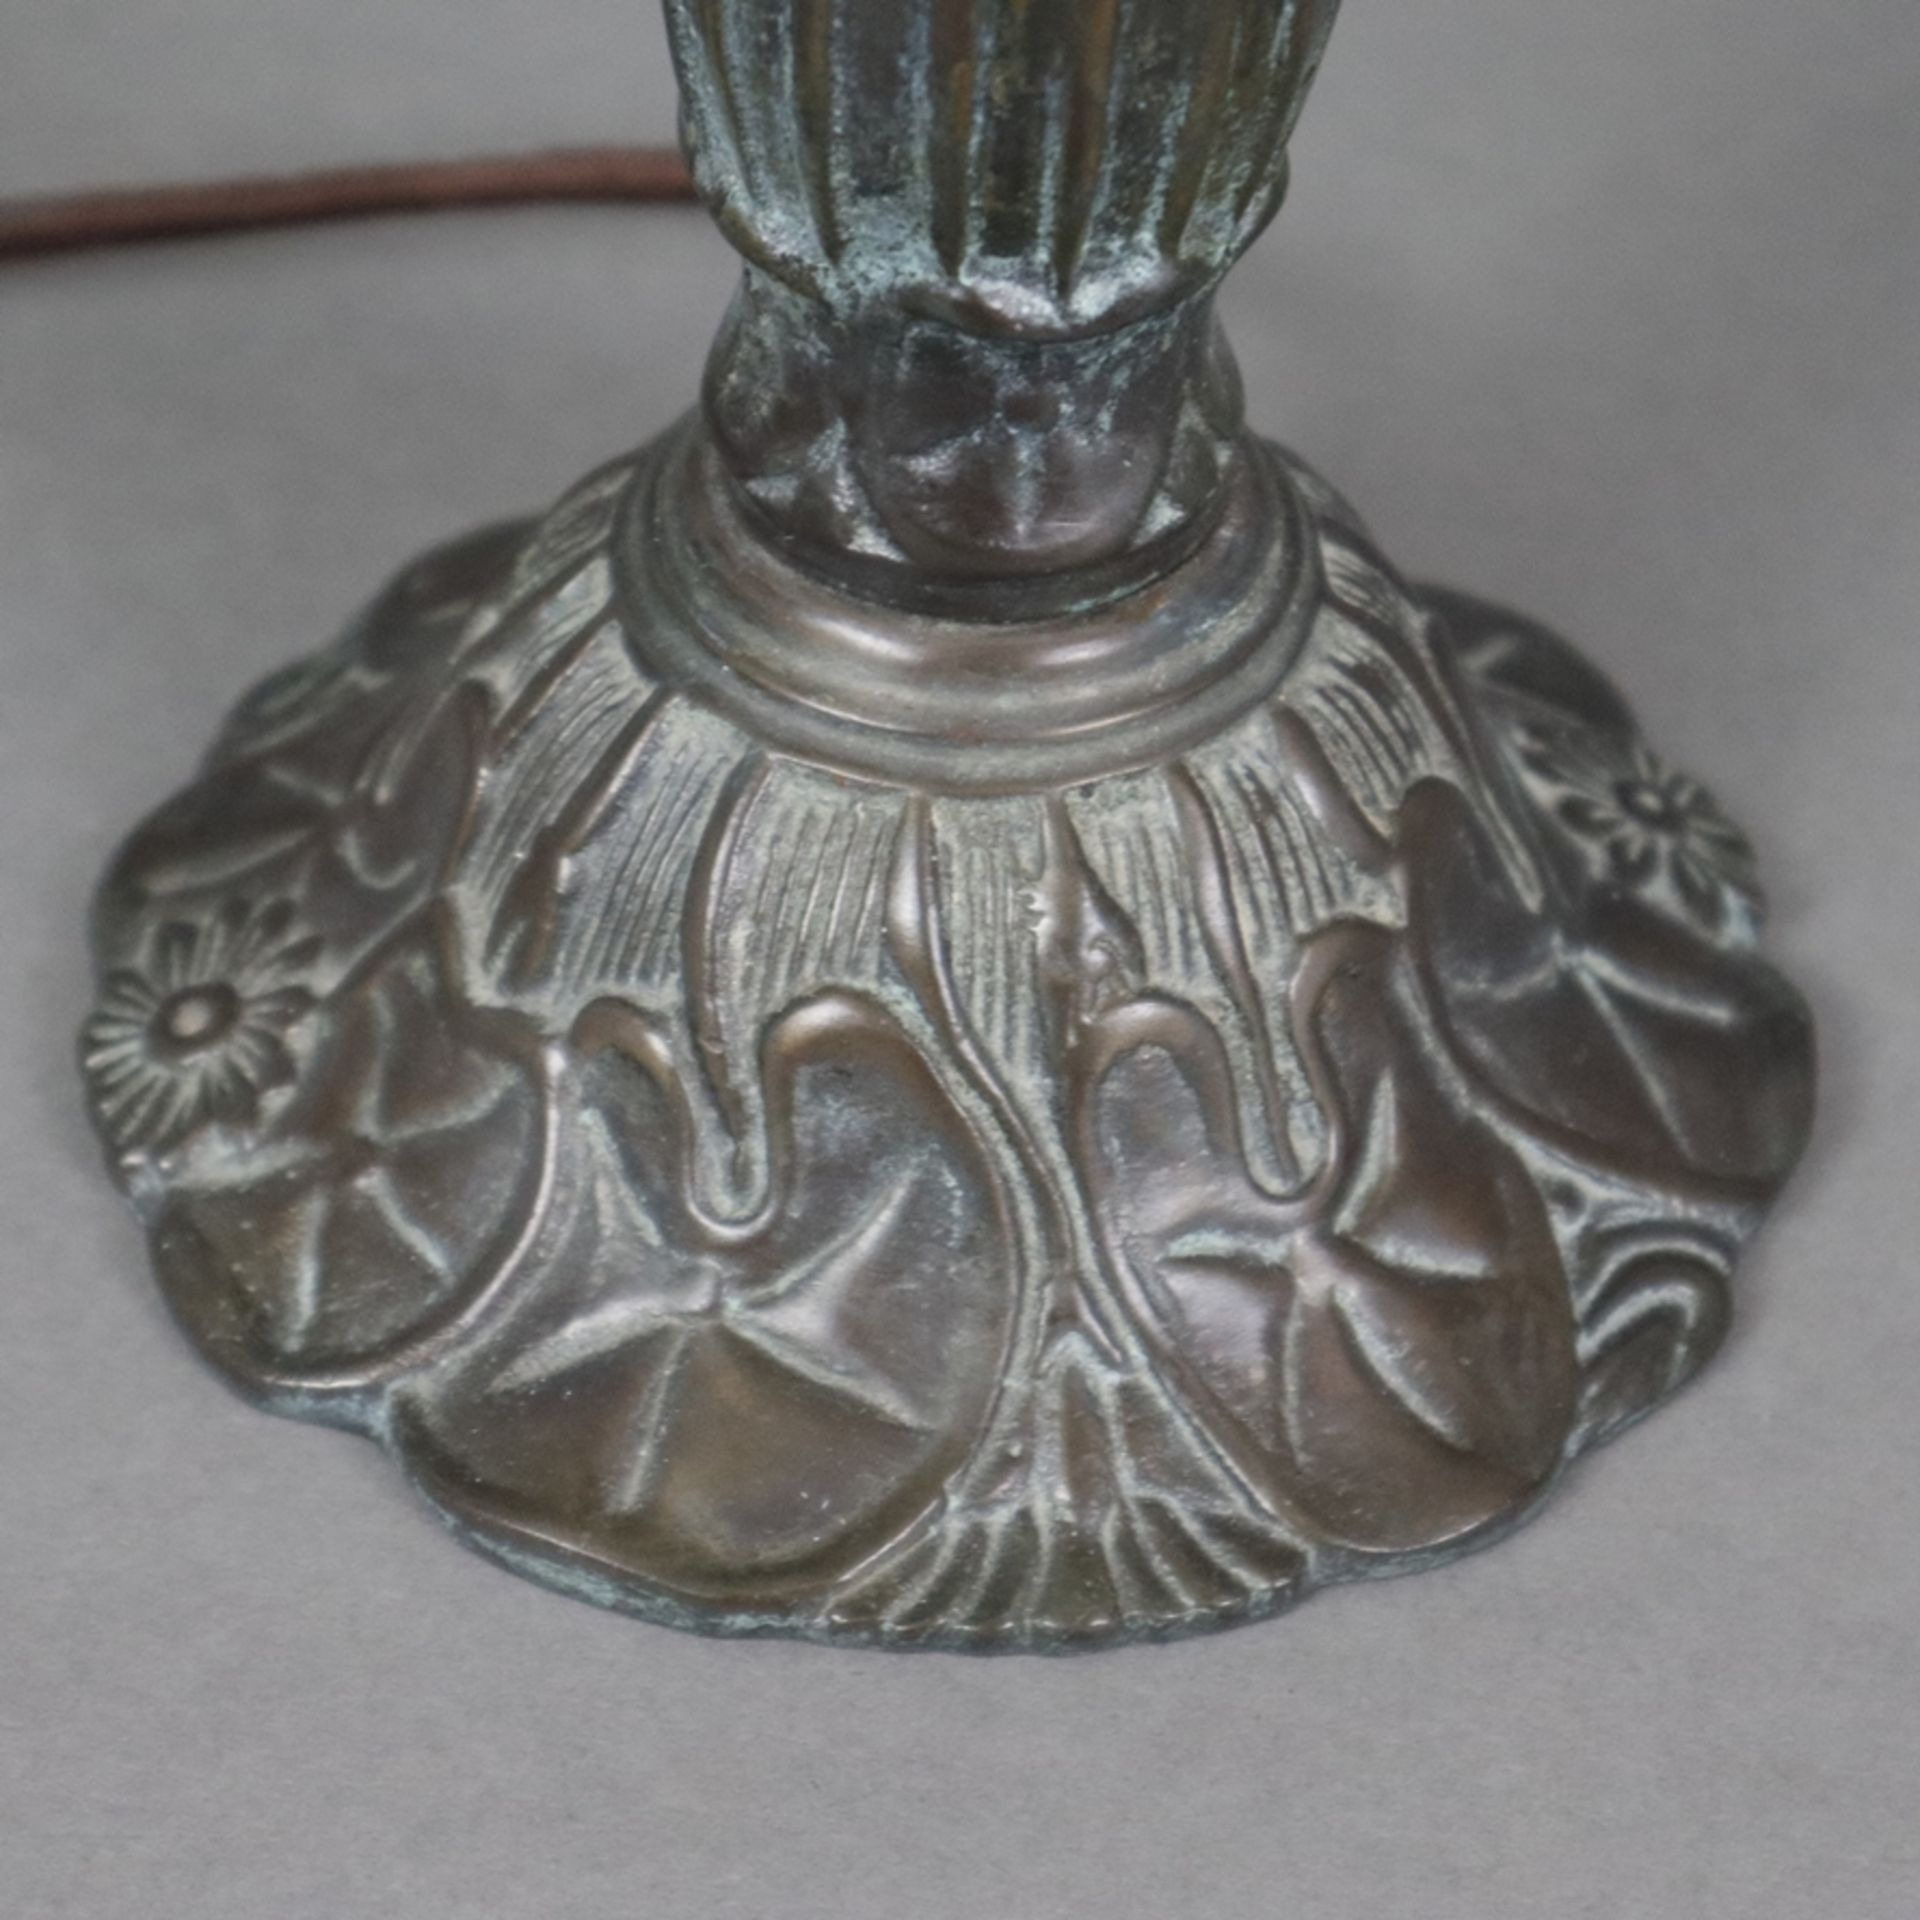 Jugendstil Tischlampe - um 1900/10, floral reliefierter Metallfuß, bronziert, glockenförmiger Glass - Image 5 of 7